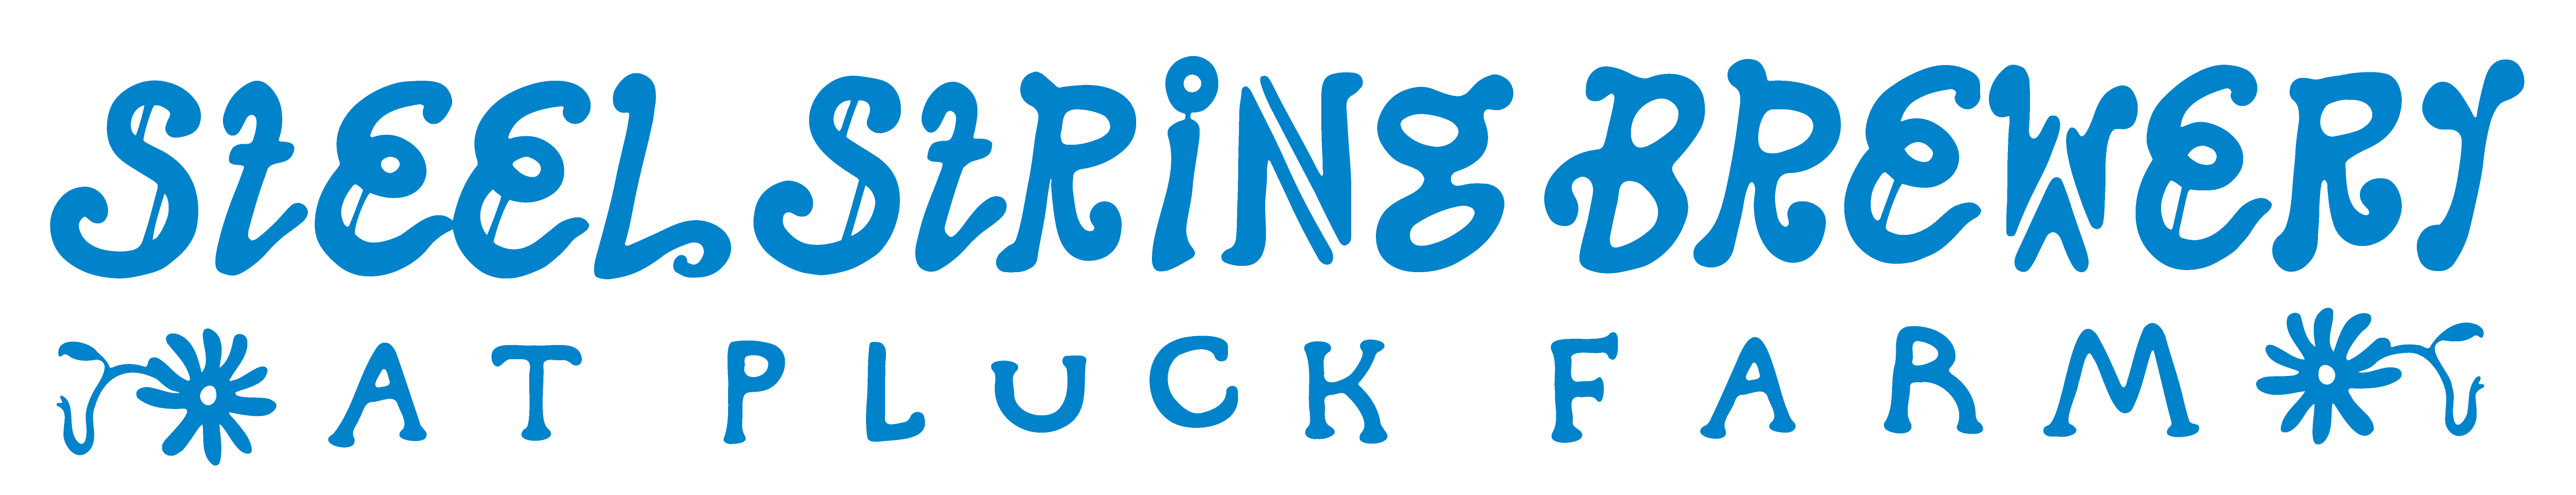 pluck farm logo